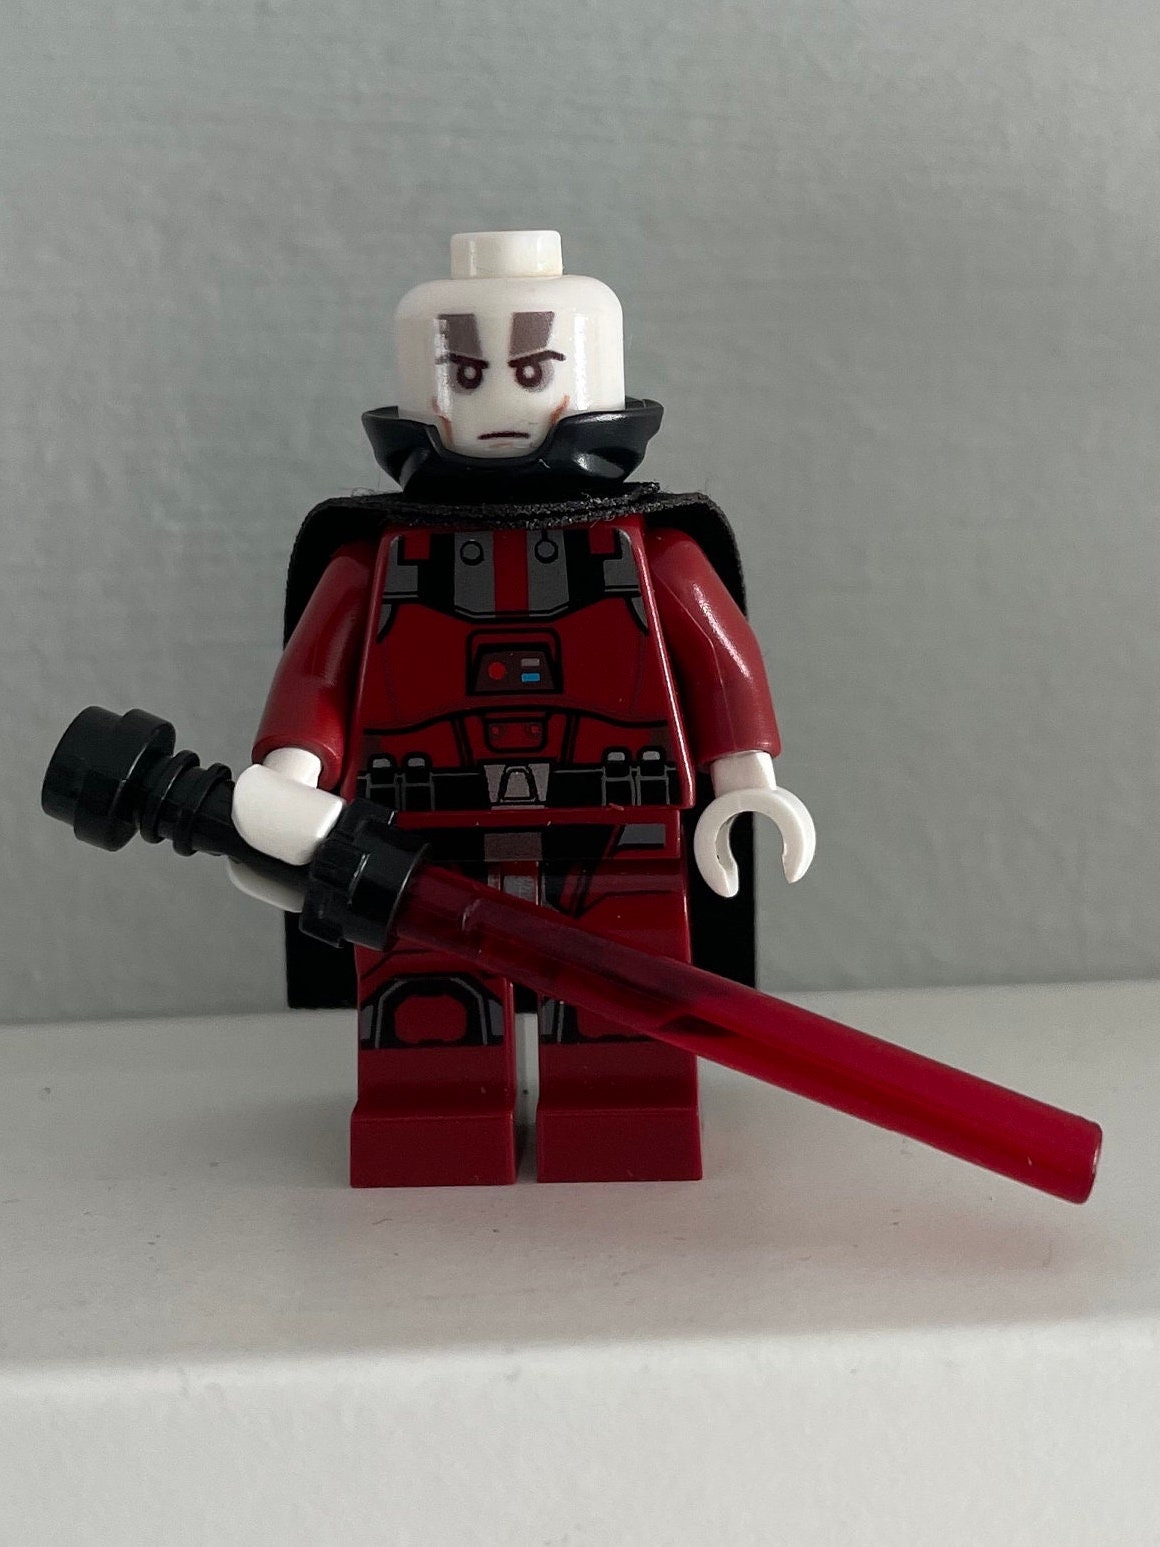 Lego Star Wars Malak Minifigure KOTOR of - Etsy